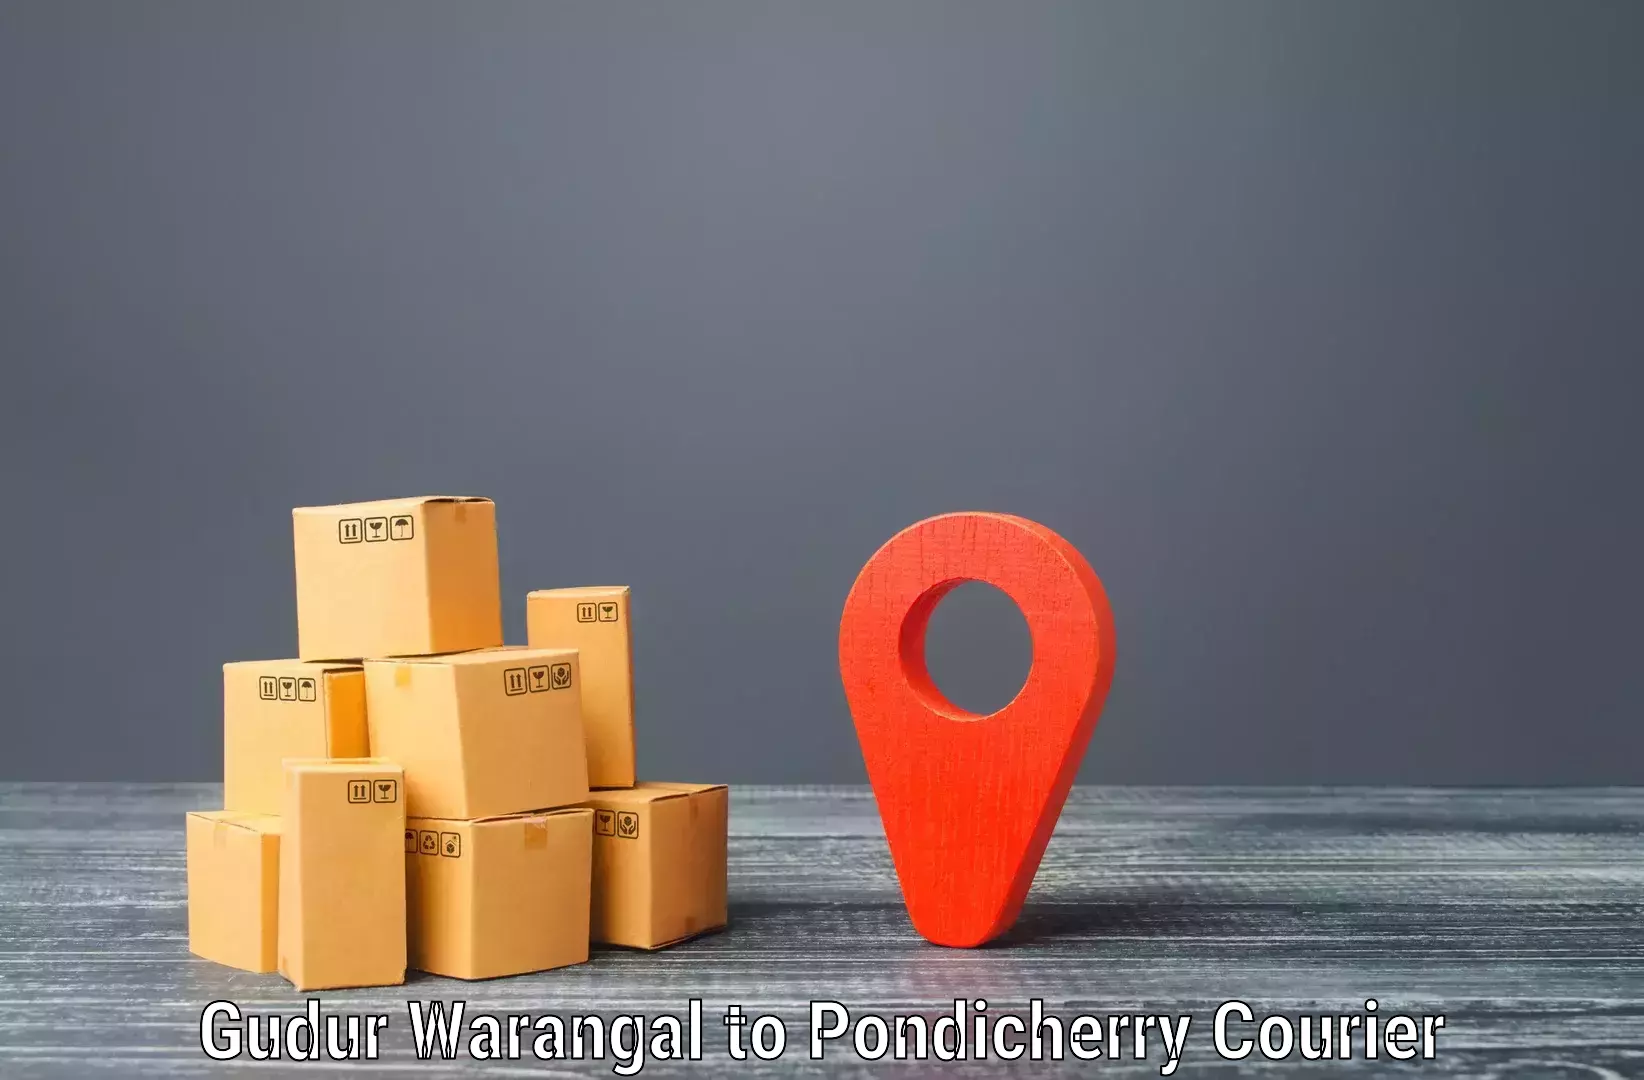 Logistics service provider Gudur Warangal to Pondicherry